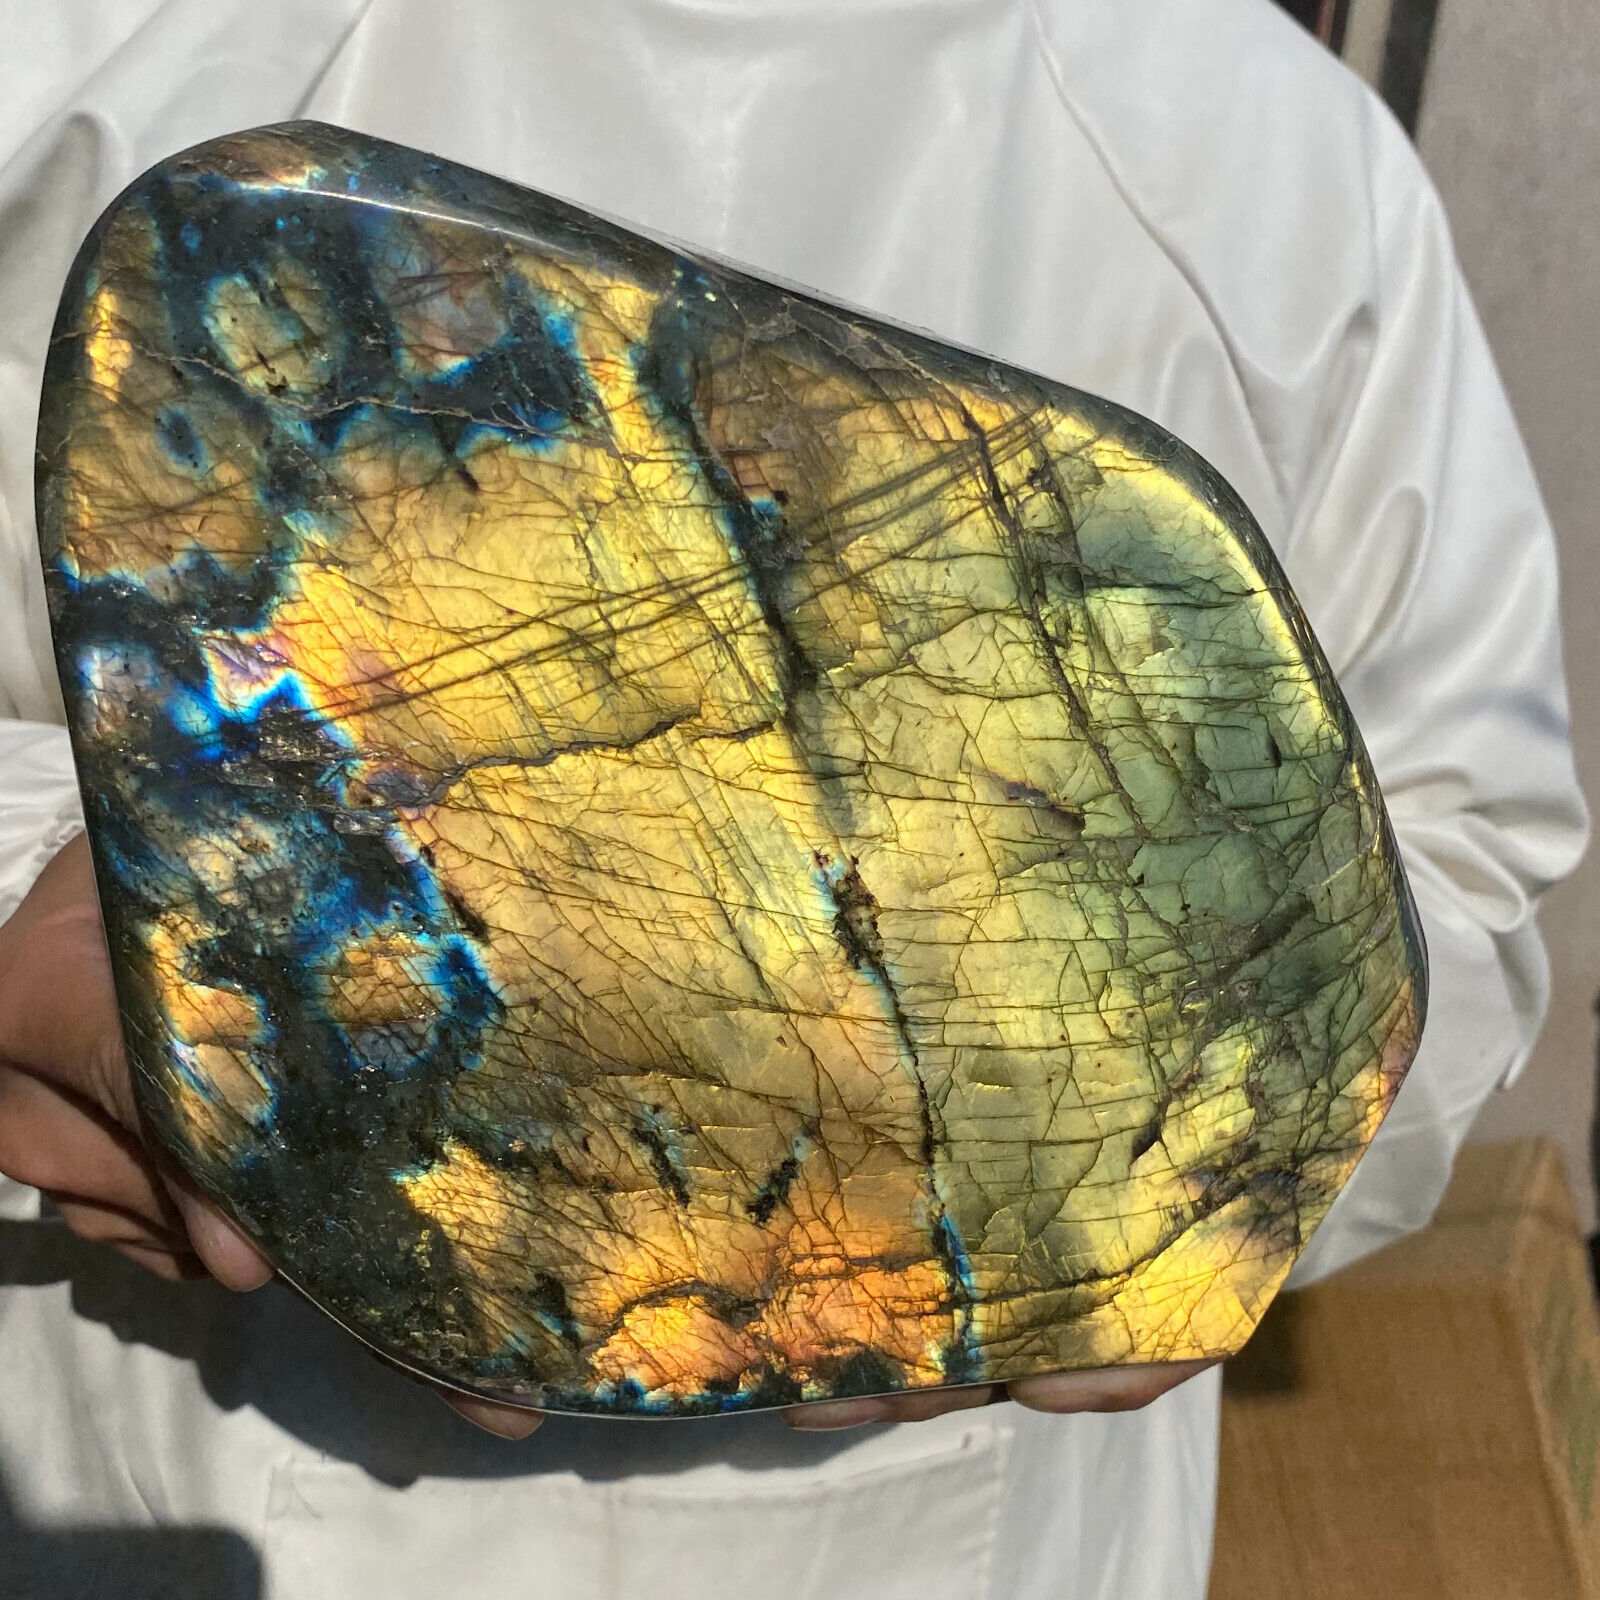 12lb Large Natural Labradorite Quartz Crystal Display Mineral Specimen Healing